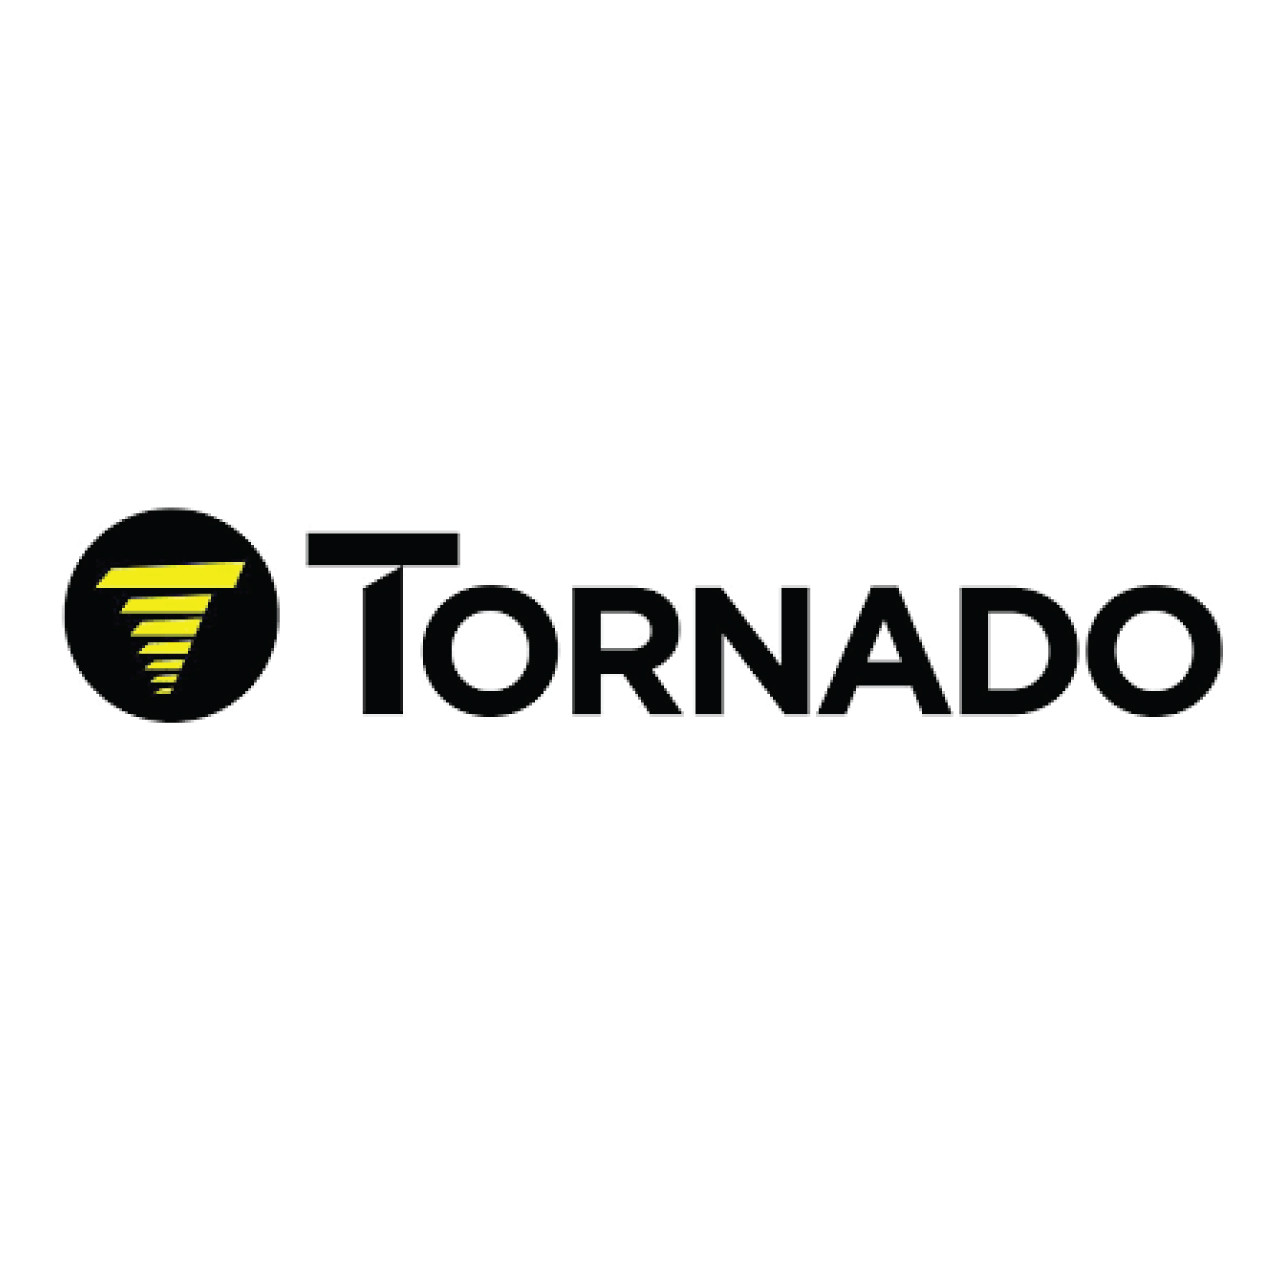 02-4085-0000, Tornado 02-4085-0000, Tornado WASHER, M8 STARLOCK, Tornado parts